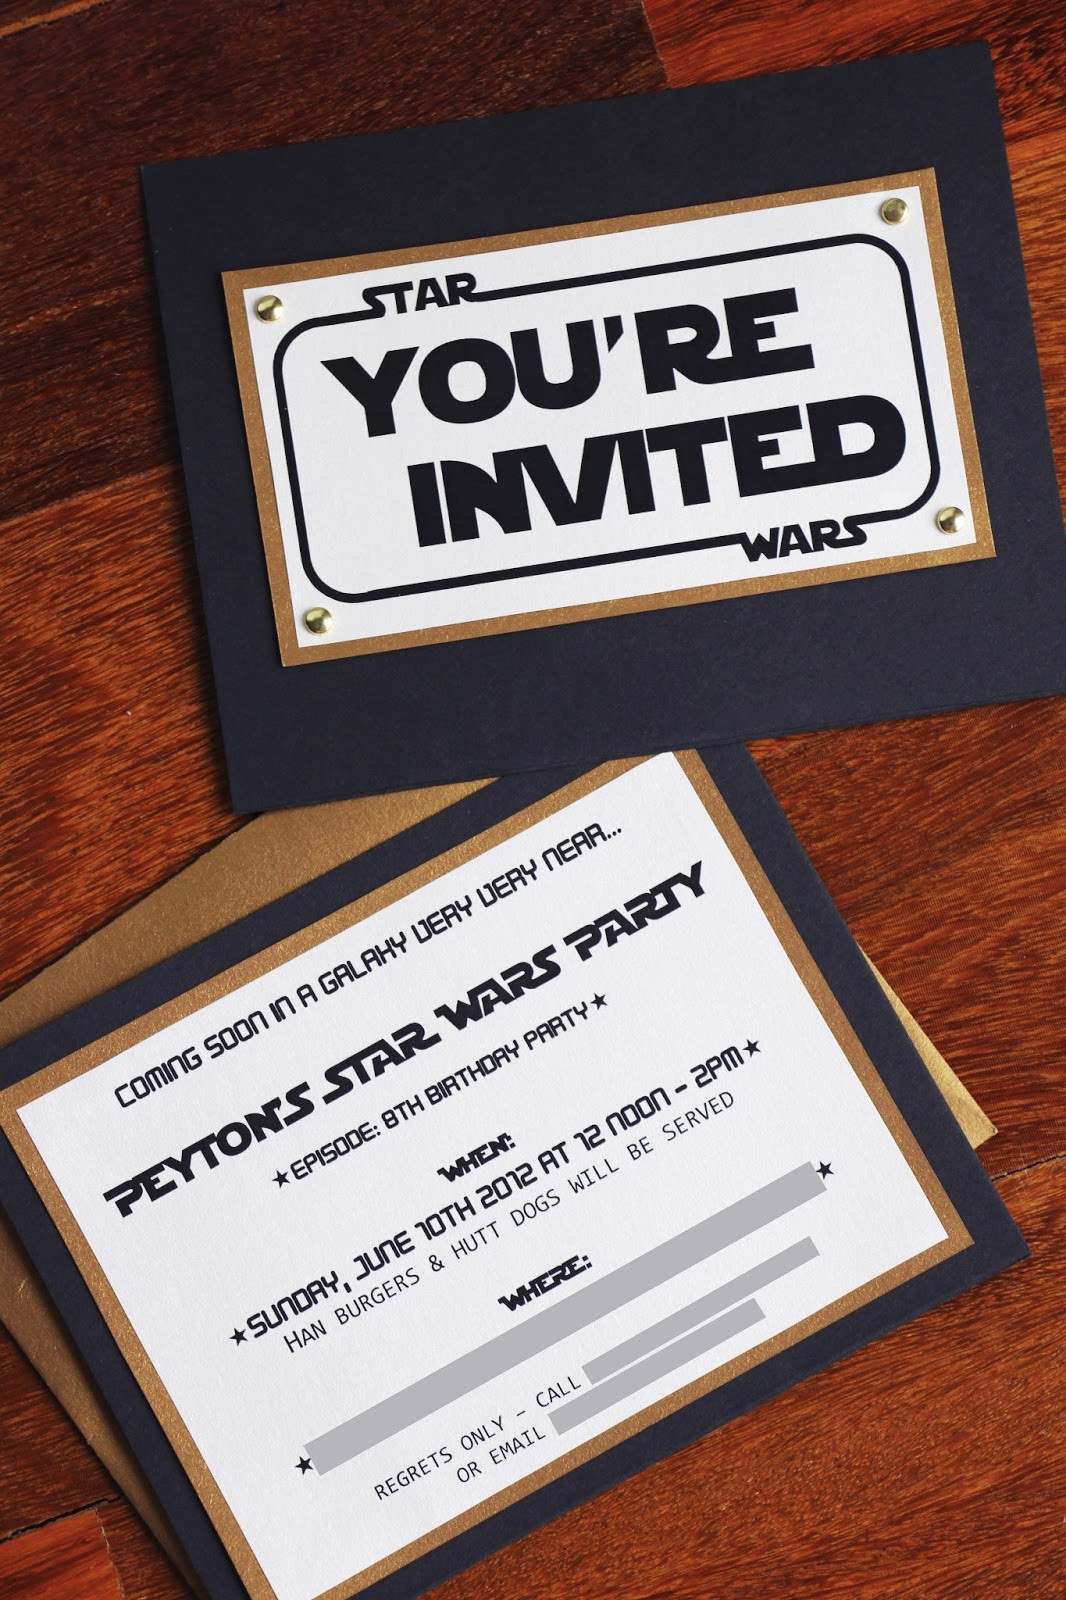 Star Wars Birthday Invitations
 The Contemplative Creative Star Wars Party Invitation